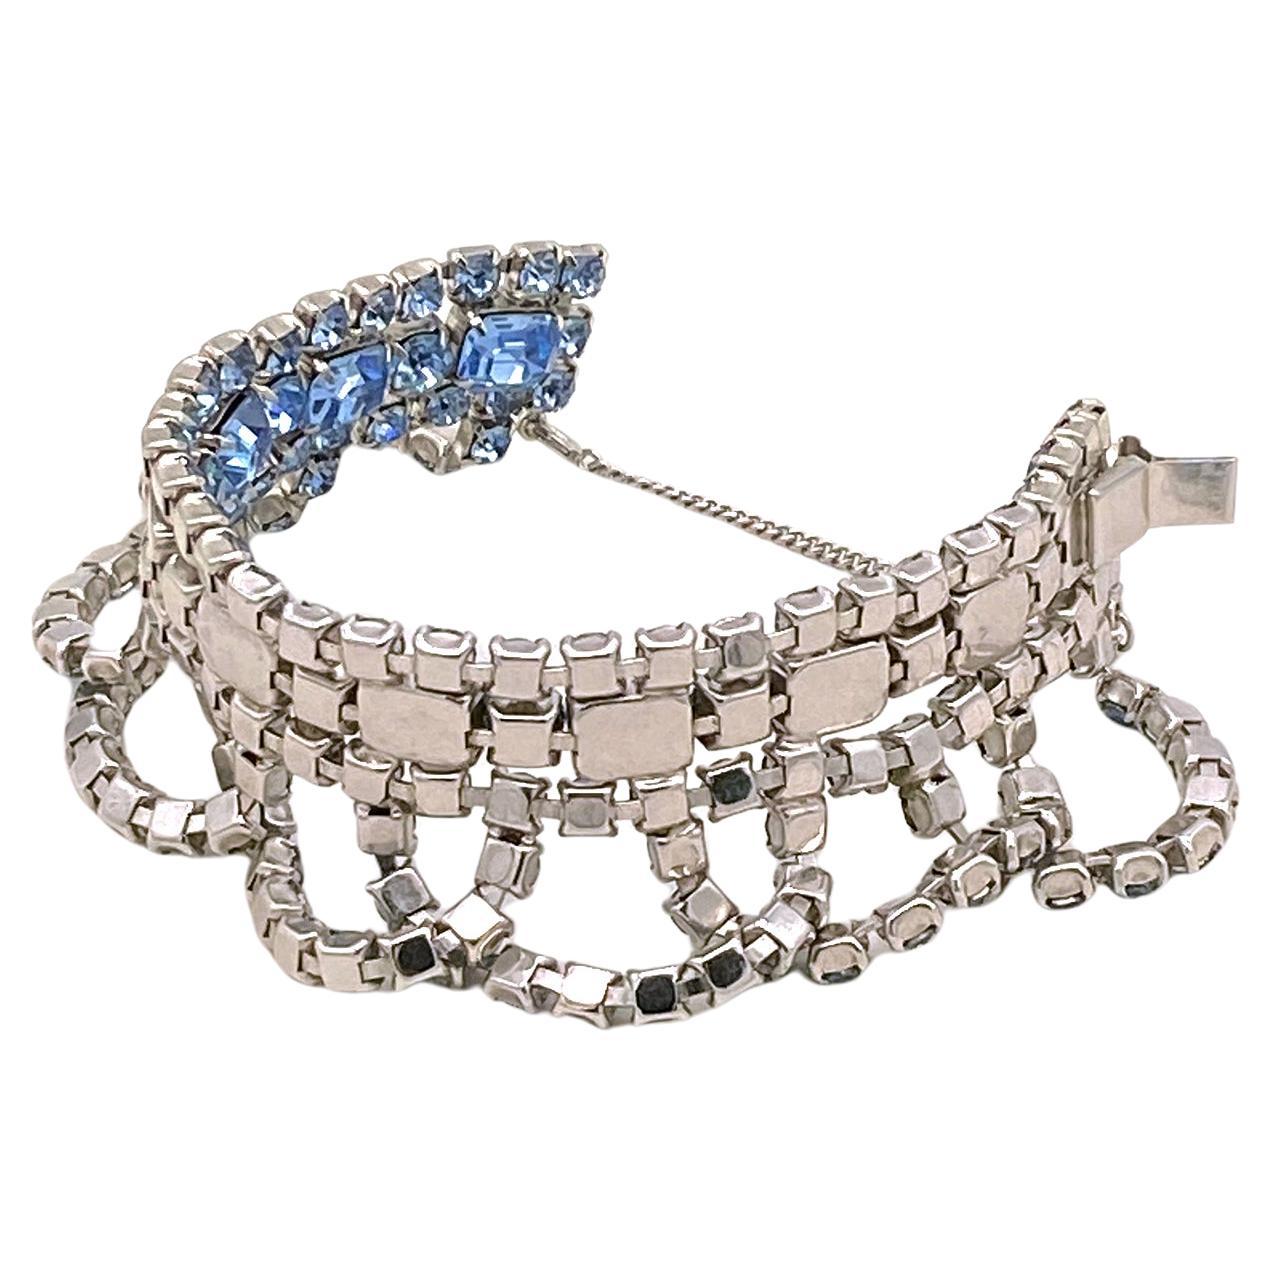  Hollywood Regency Style Blue Garnished Bracelet  In Good Condition For Sale In Atlanta, GA